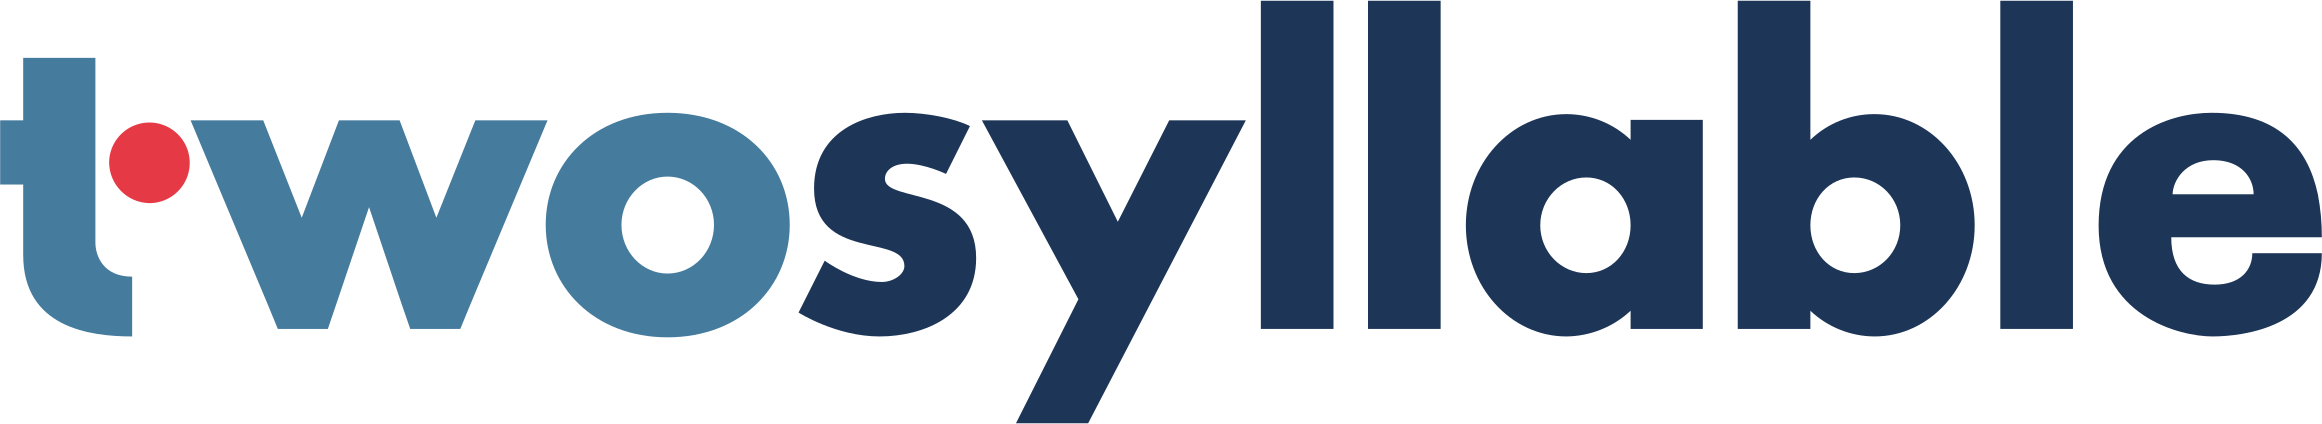 TwoSyllable logo